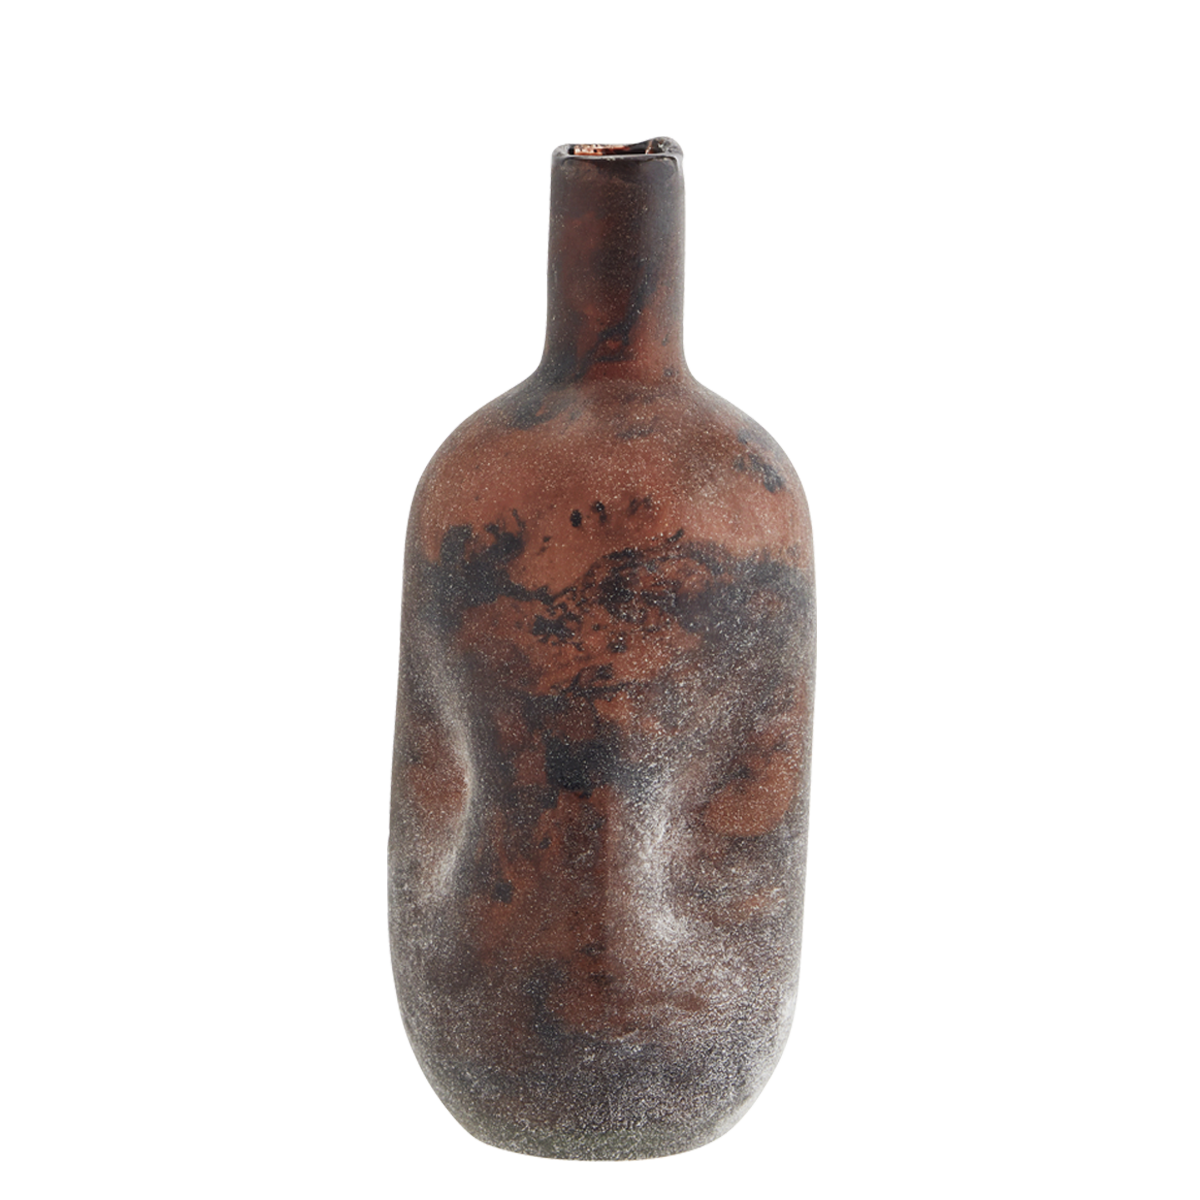 Organic shaped glass vase